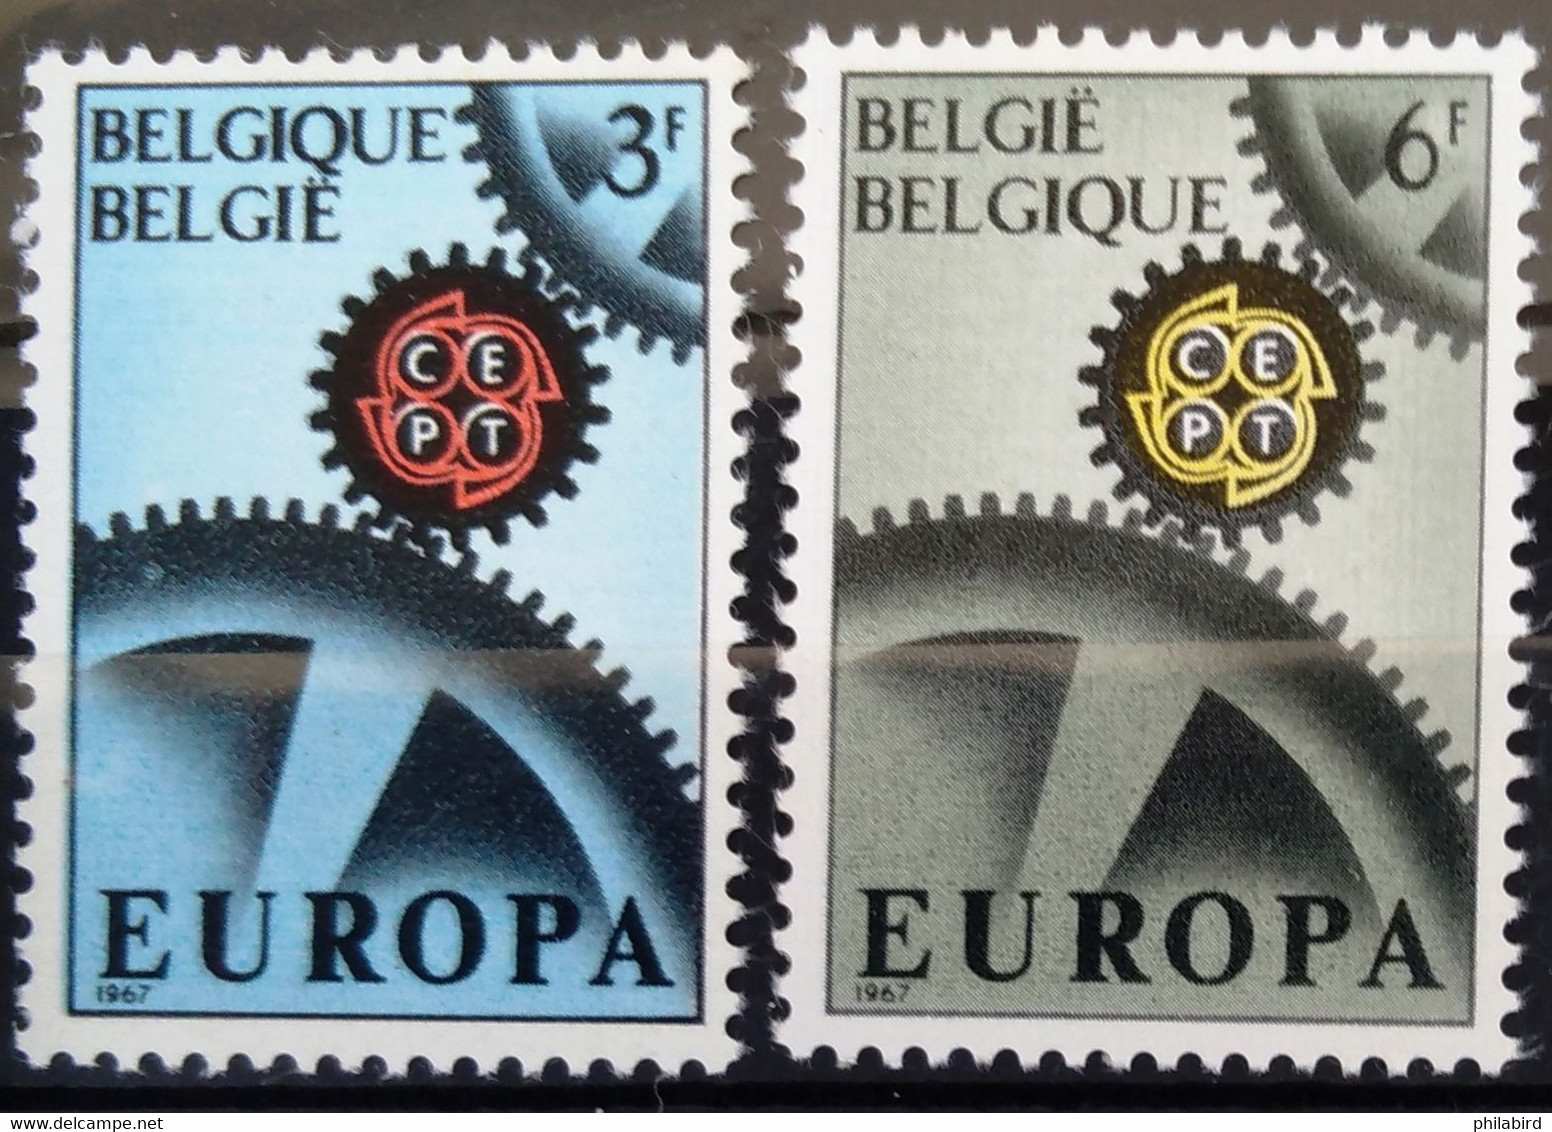 EUROPA 1967 - BELGIQUE                  N° 1415/1416                       NEUF** - 1967